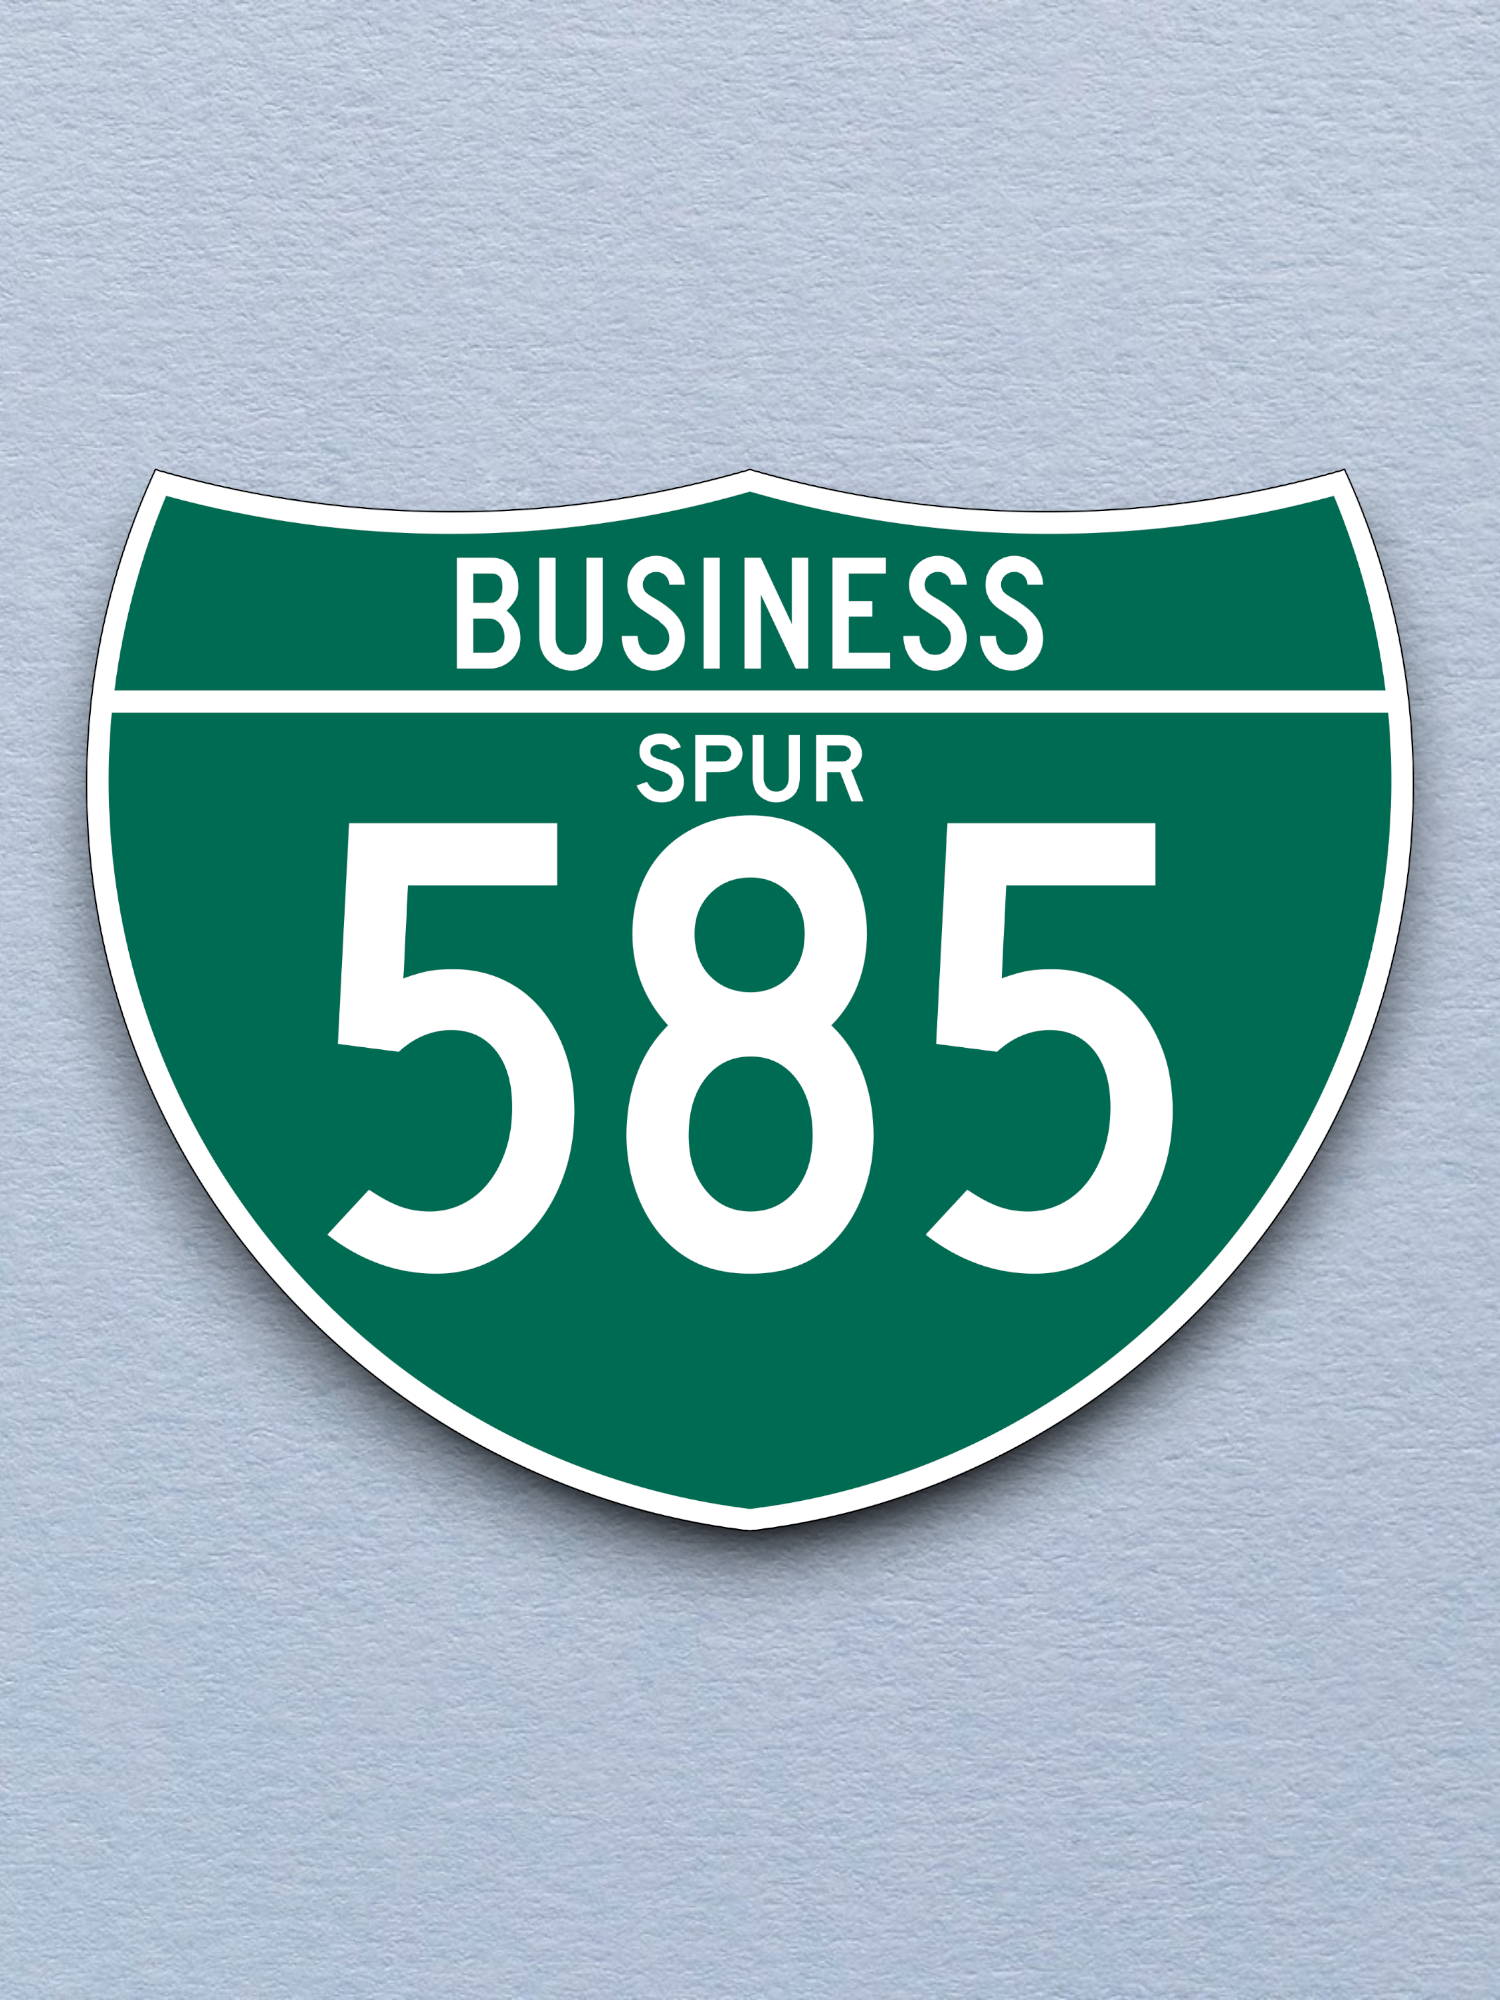 Business Spur 585 Road Sign Sticker